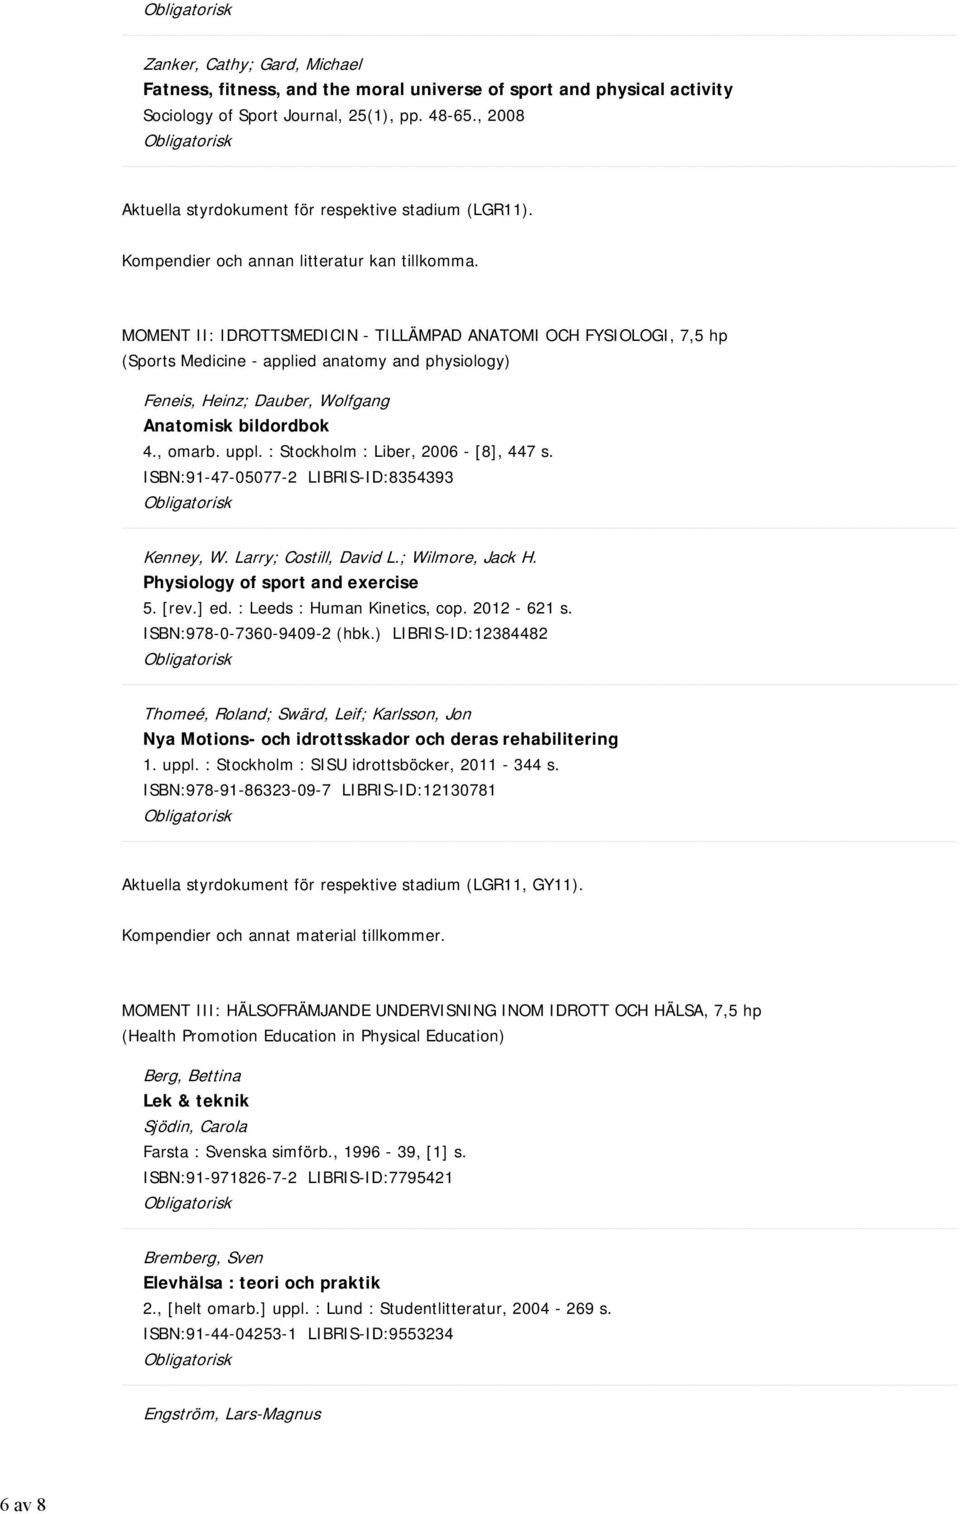 MOMENT II: IDROTTSMEDICIN - TILLÄMPAD ANATOMI OCH FYSIOLOGI, 7,5 hp (Sports Medicine - applied anatomy and physiology) Feneis, Heinz; Dauber, Wolfgang Anatomisk bildordbok 4., omarb. uppl.